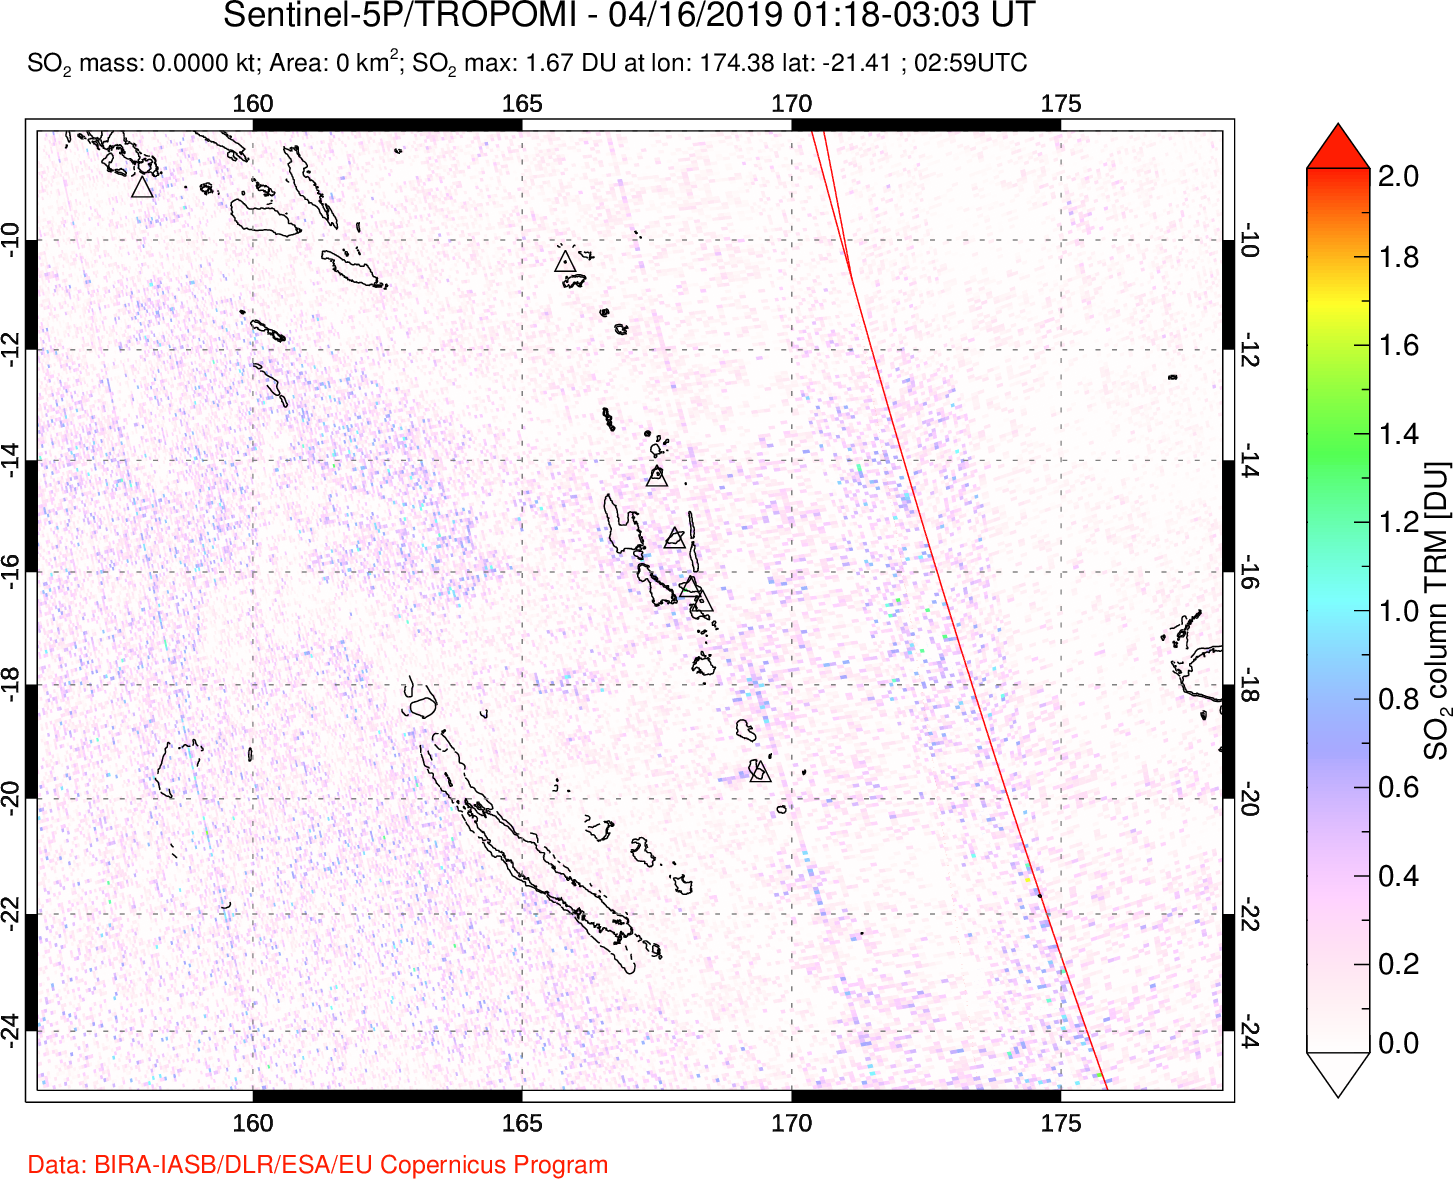 A sulfur dioxide image over Vanuatu, South Pacific on Apr 16, 2019.